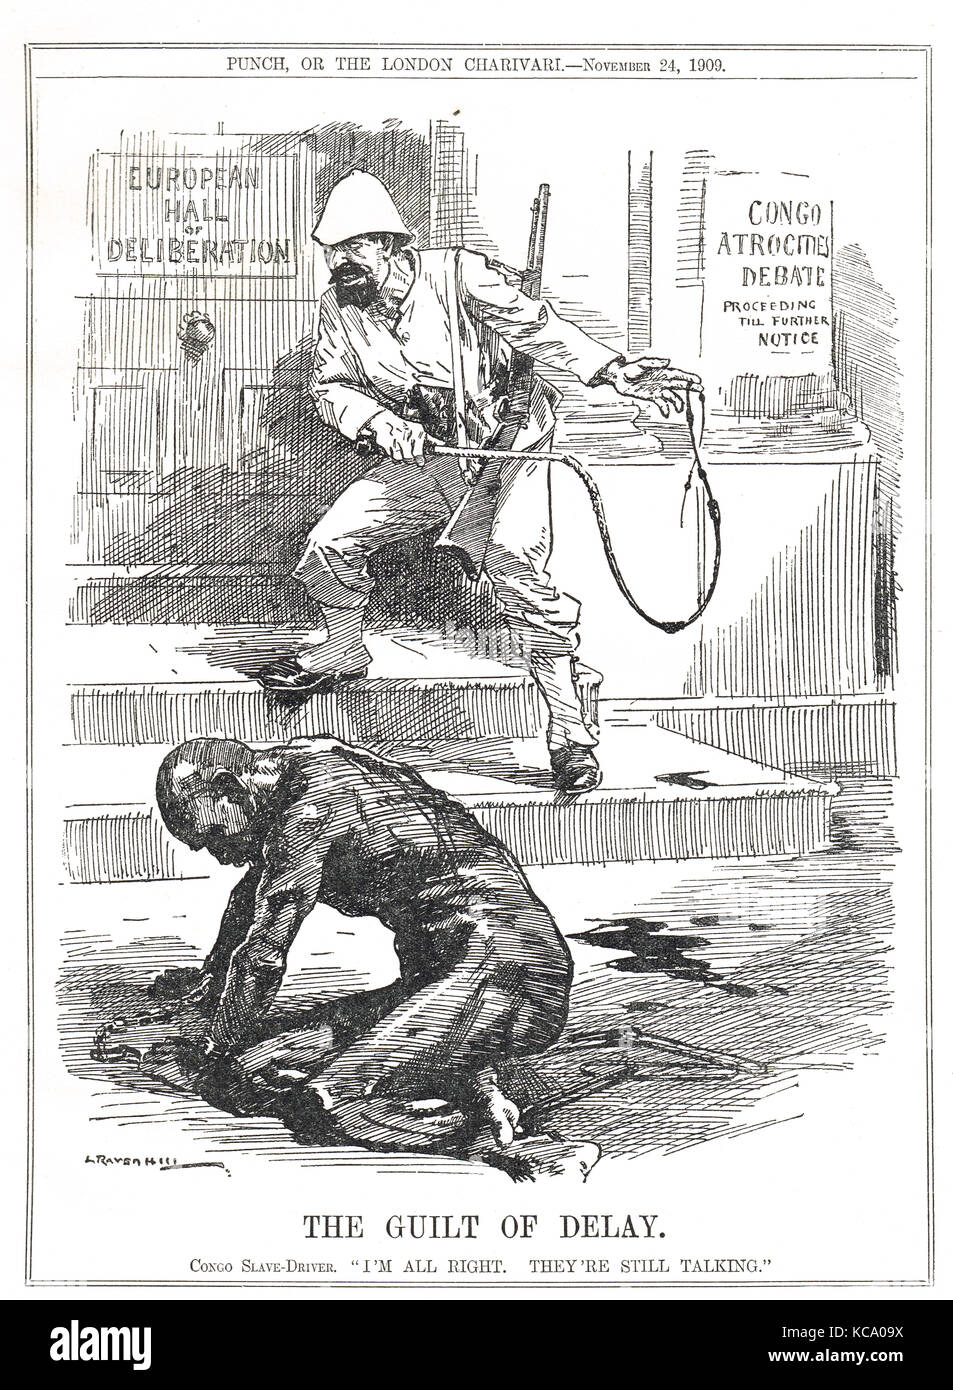 La colpa del ritardo, la schiavitù nel Congo Belga, Punch cartoon, 1909 Foto Stock